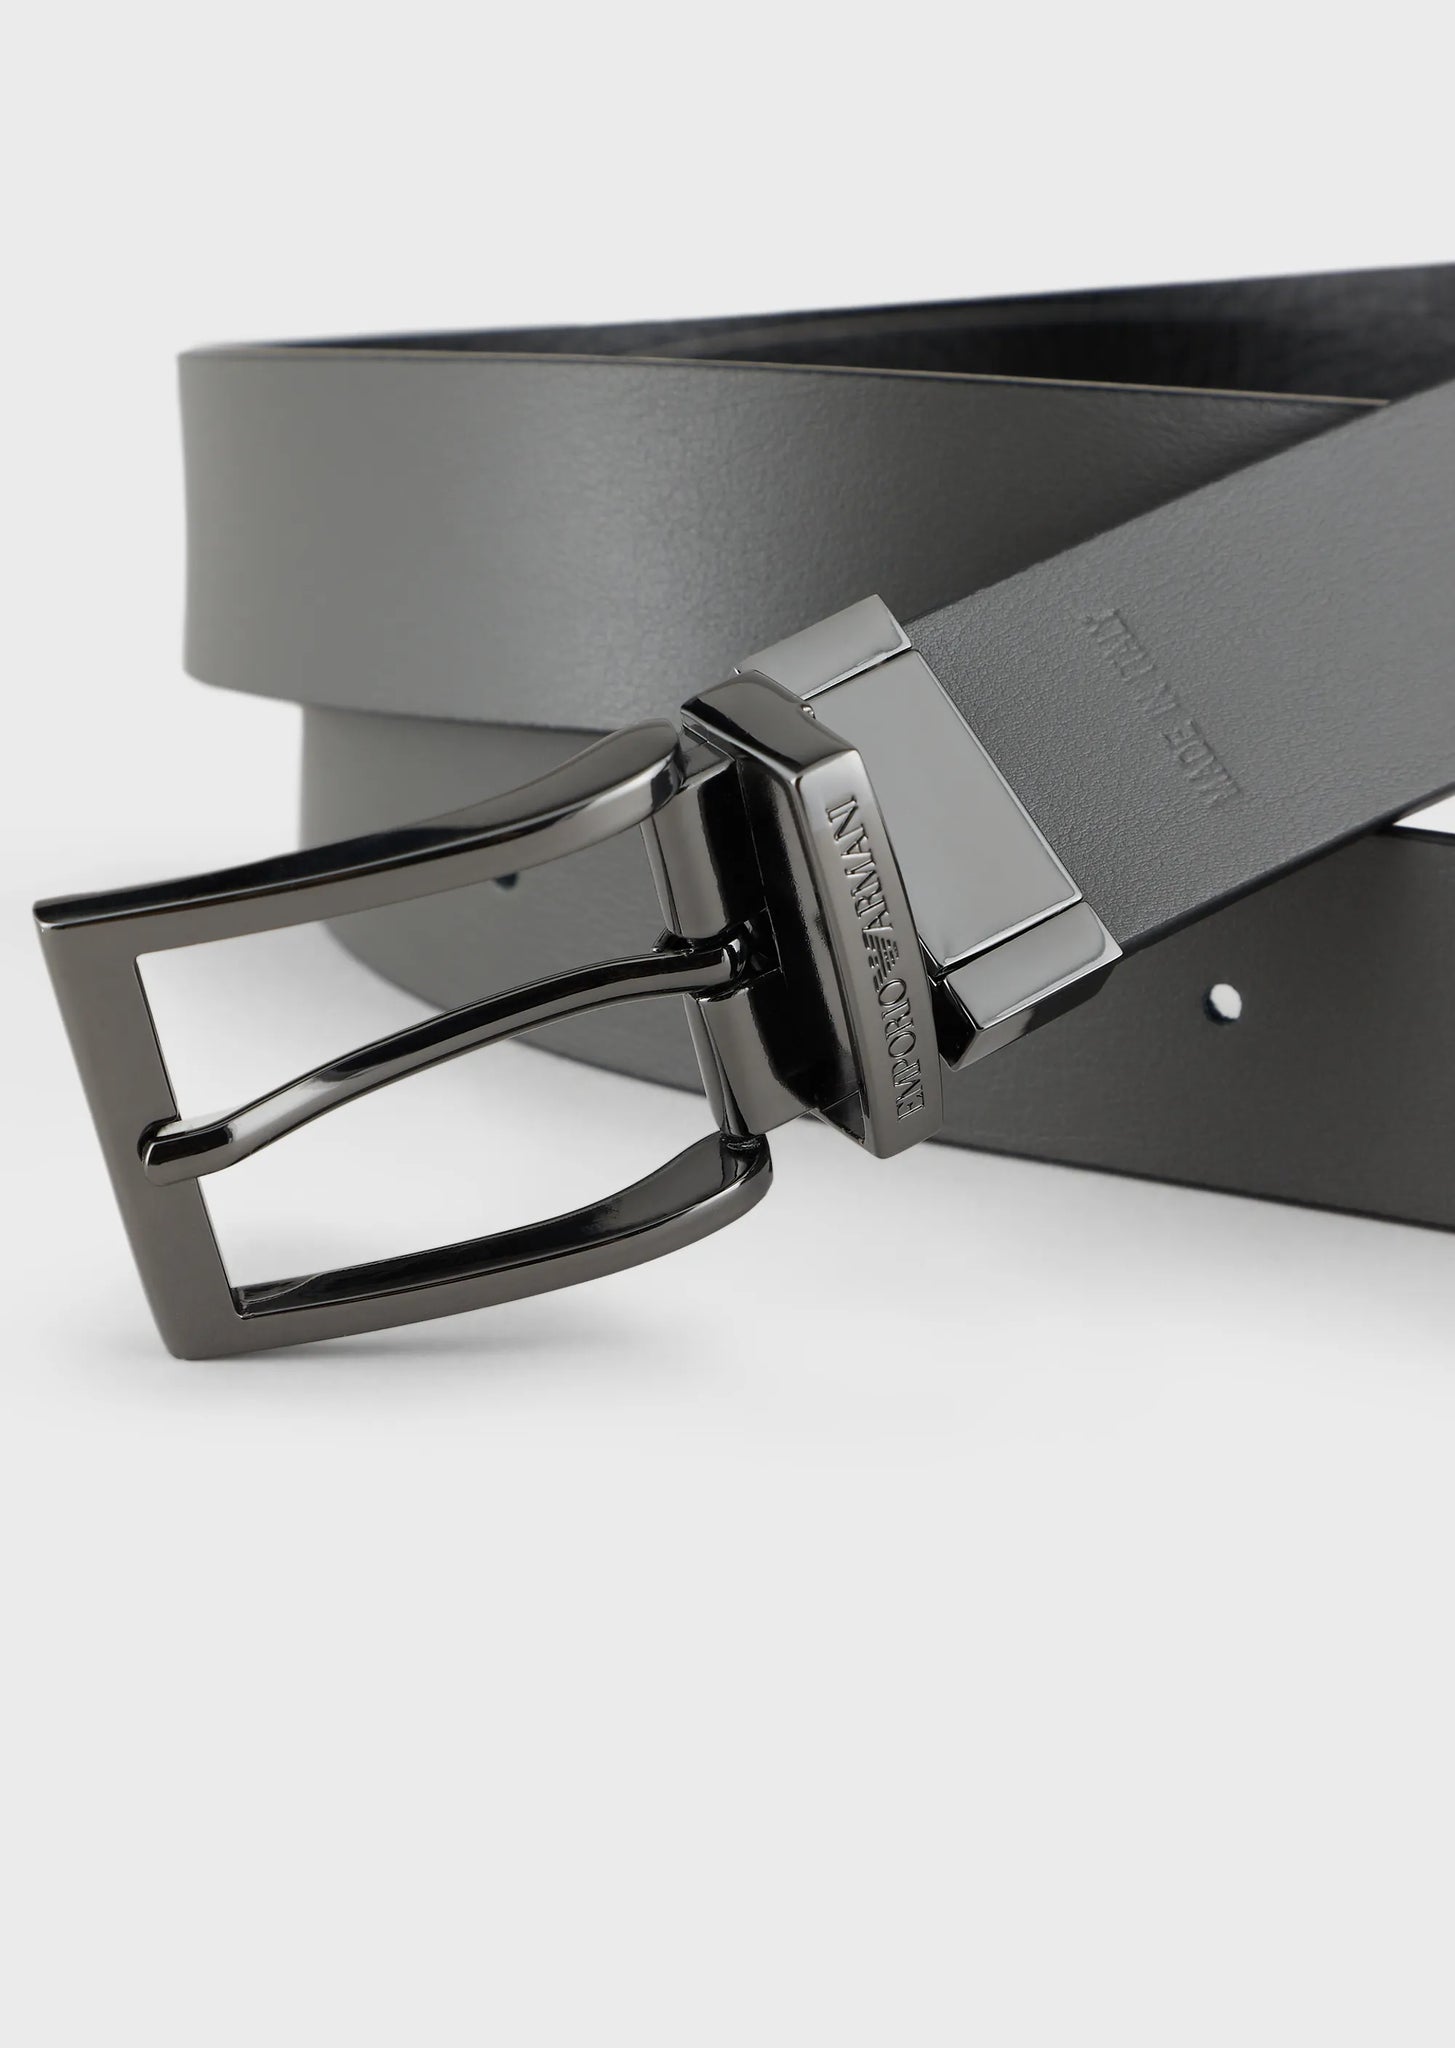 Cintura Reversibile in Pelle Emporio Armani / Grigio - Ideal Moda